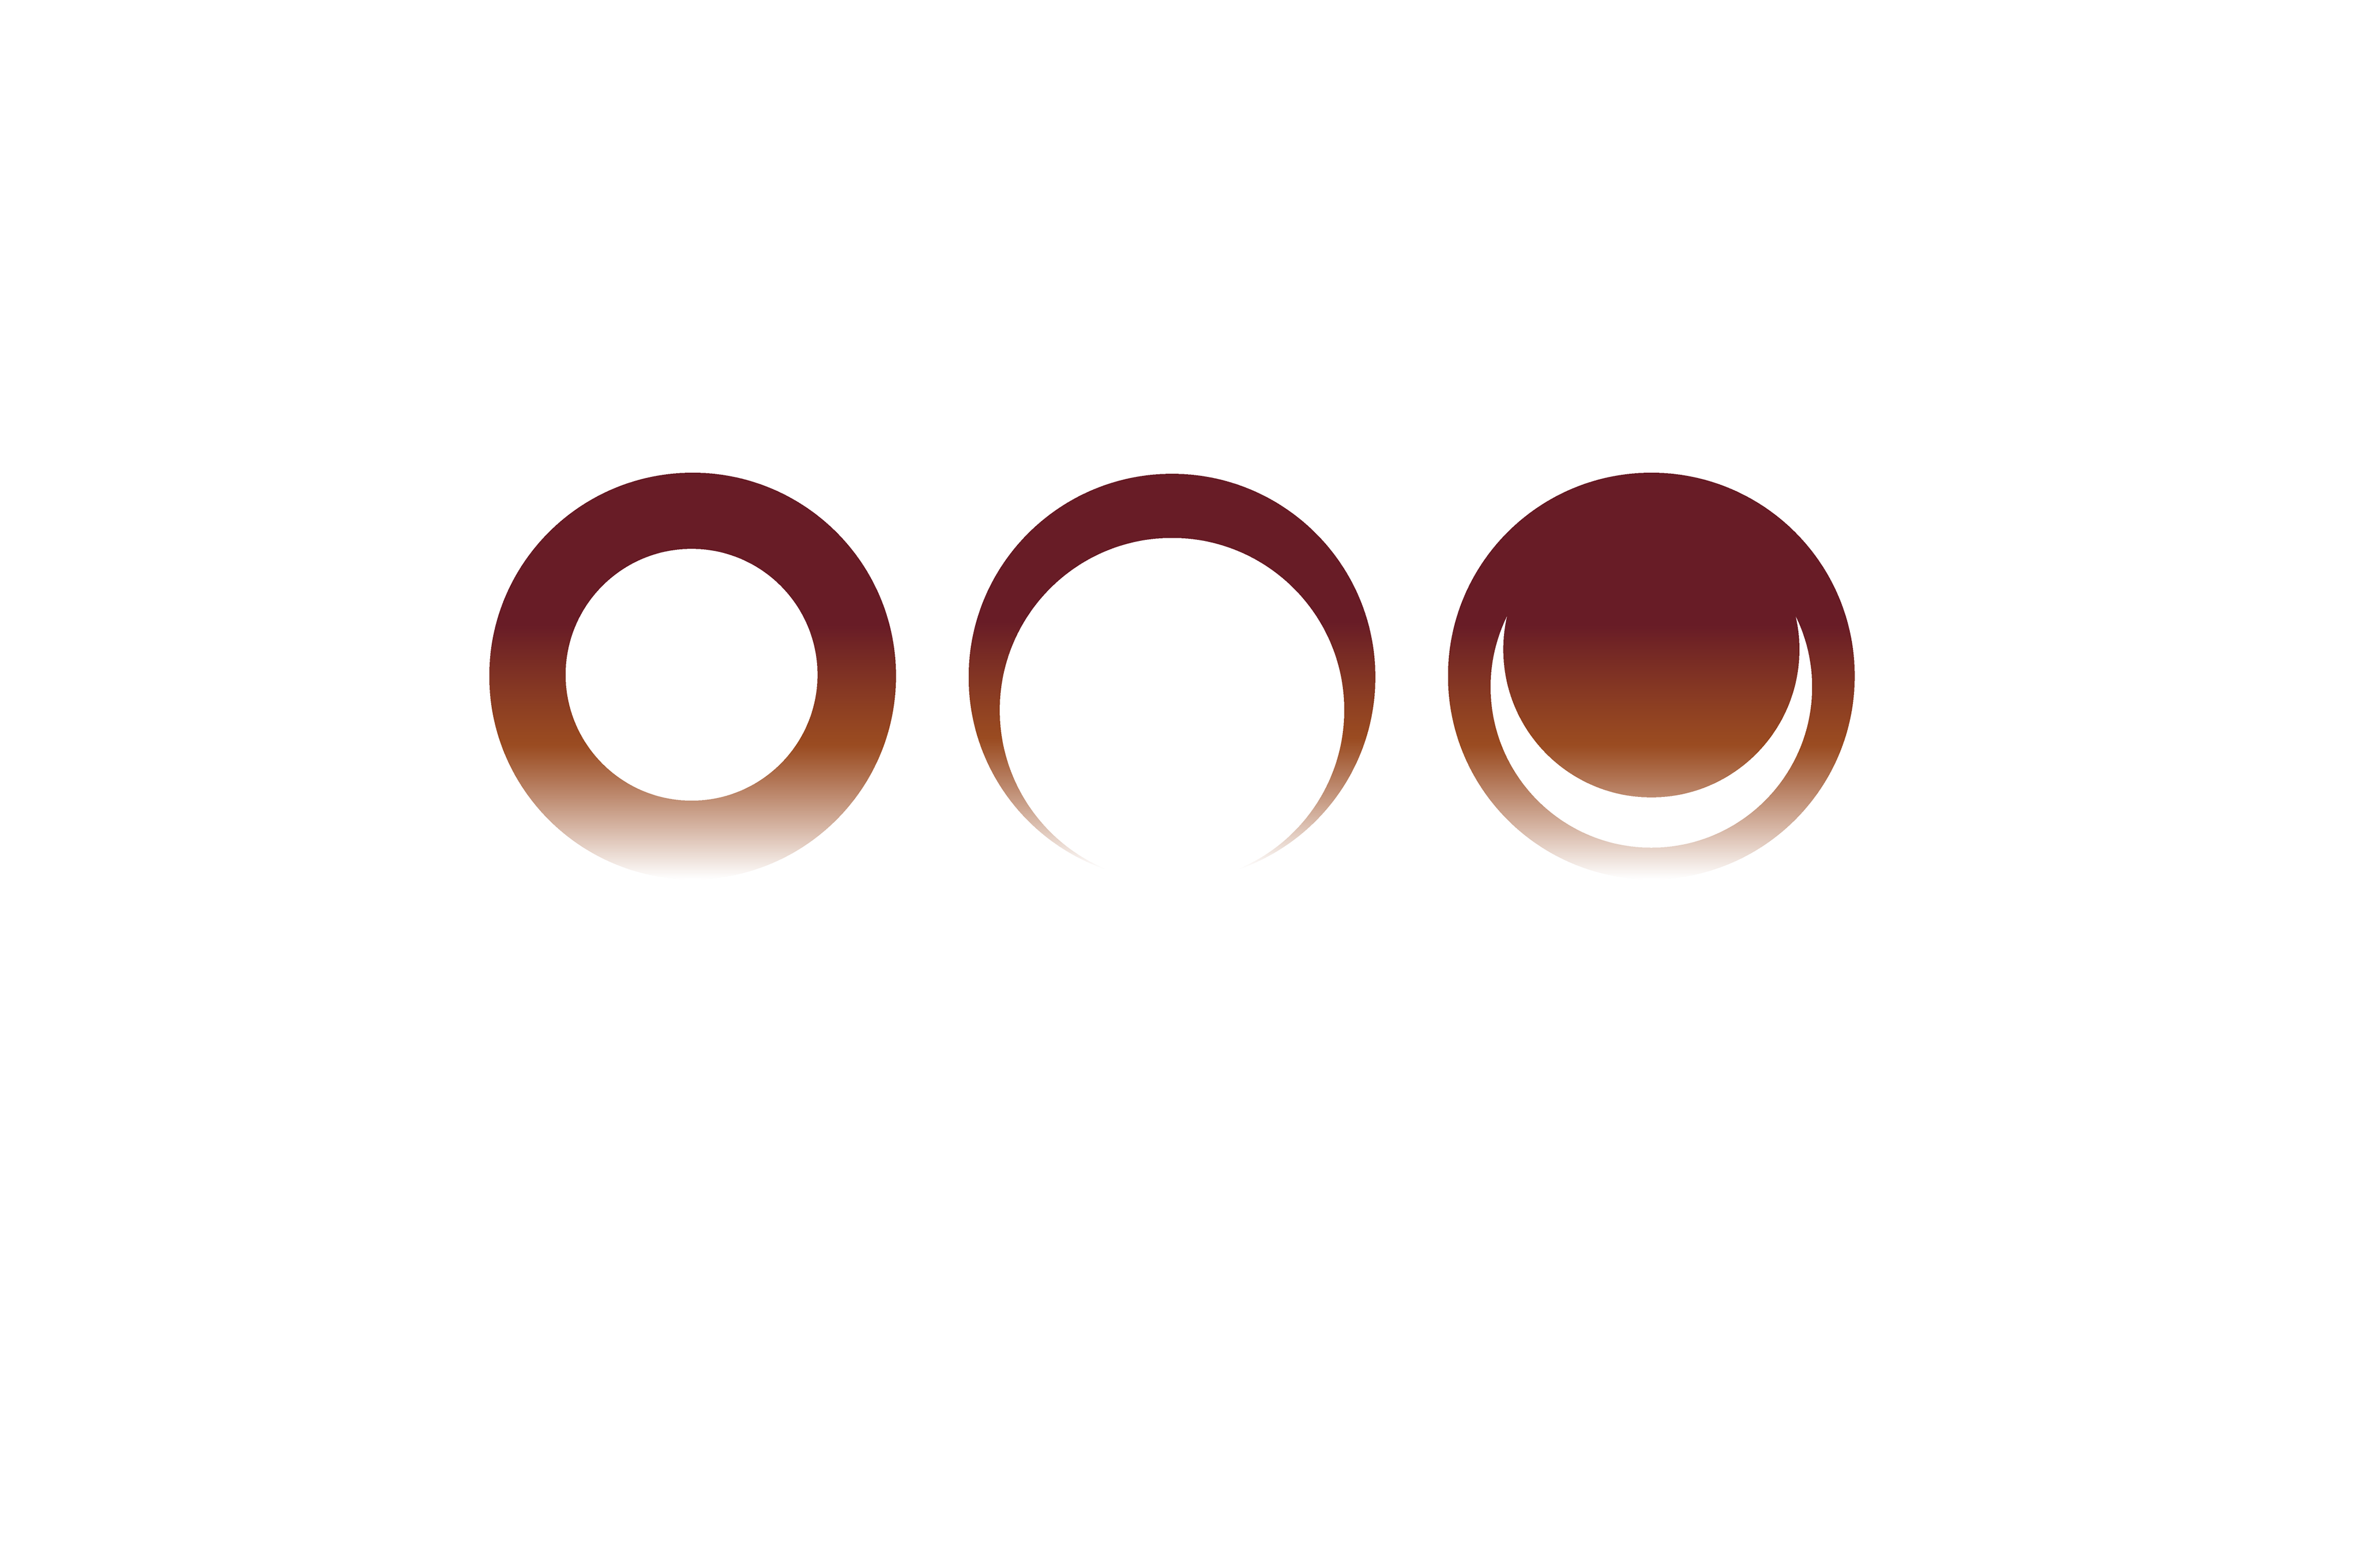 Elypsis